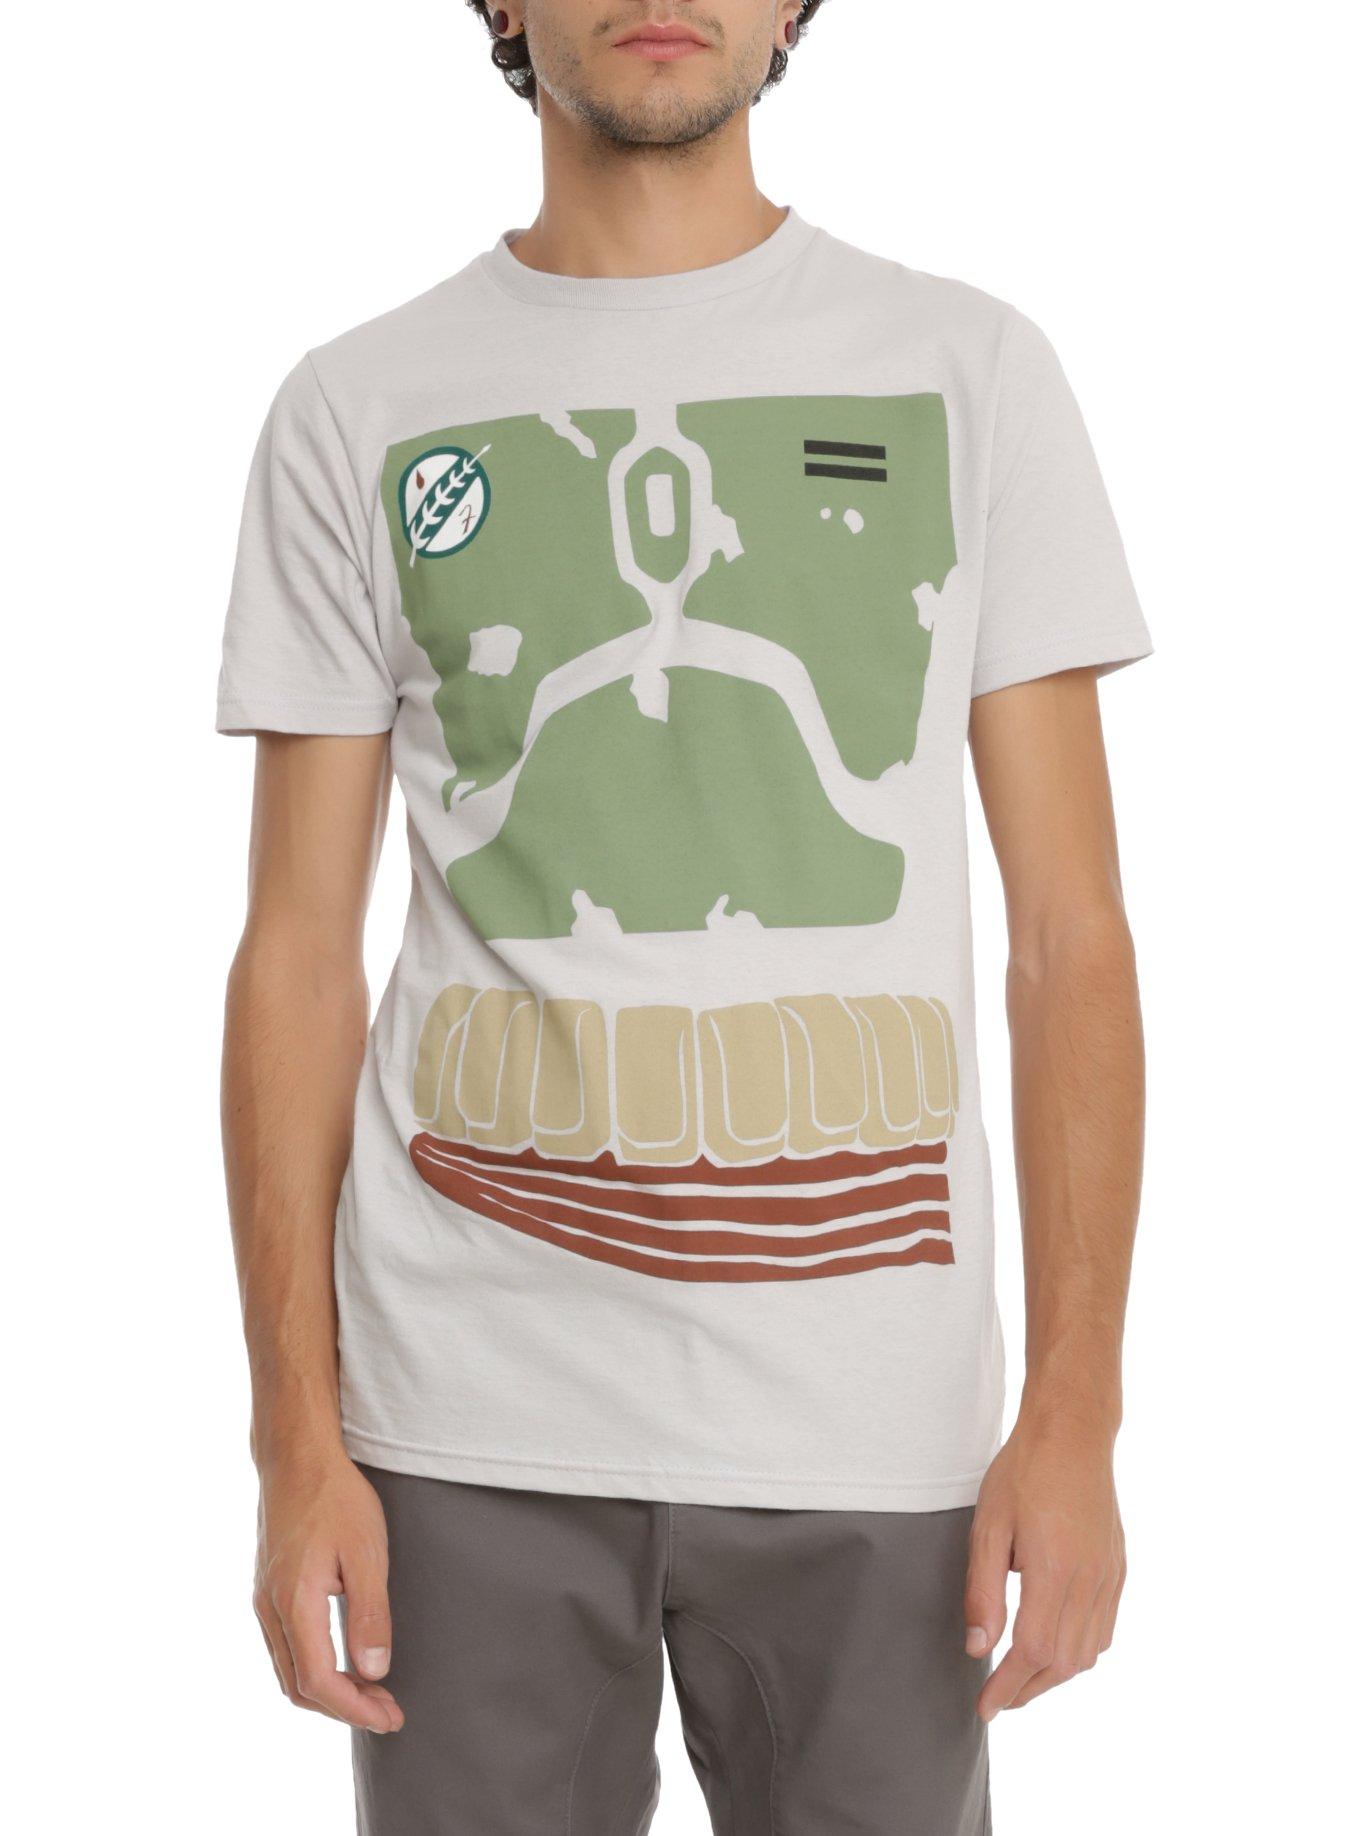 Star Wars Boba Fett Costume T-Shirt, , hi-res